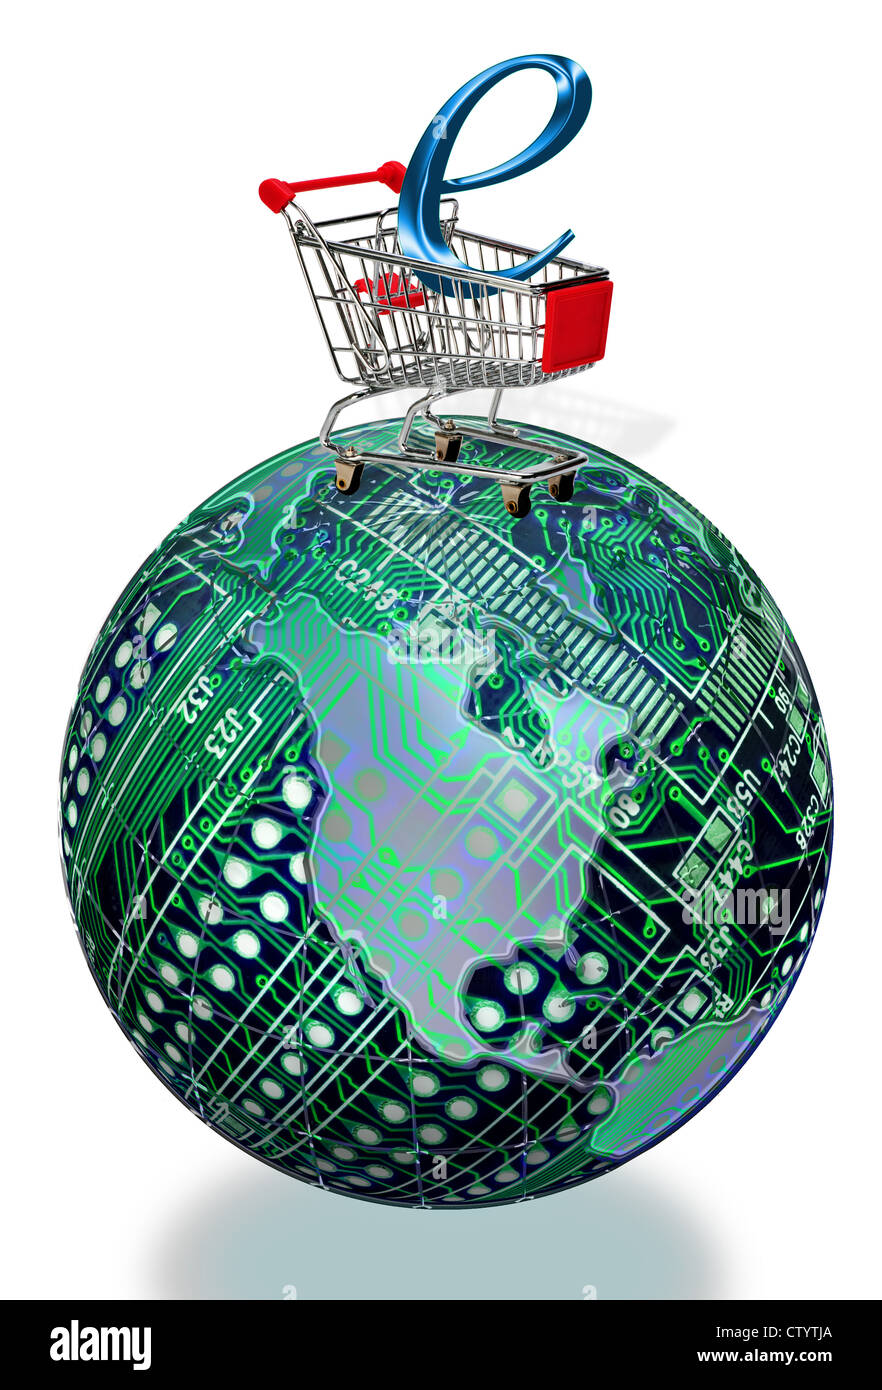 E-Commerce Shopping. Stock Photo